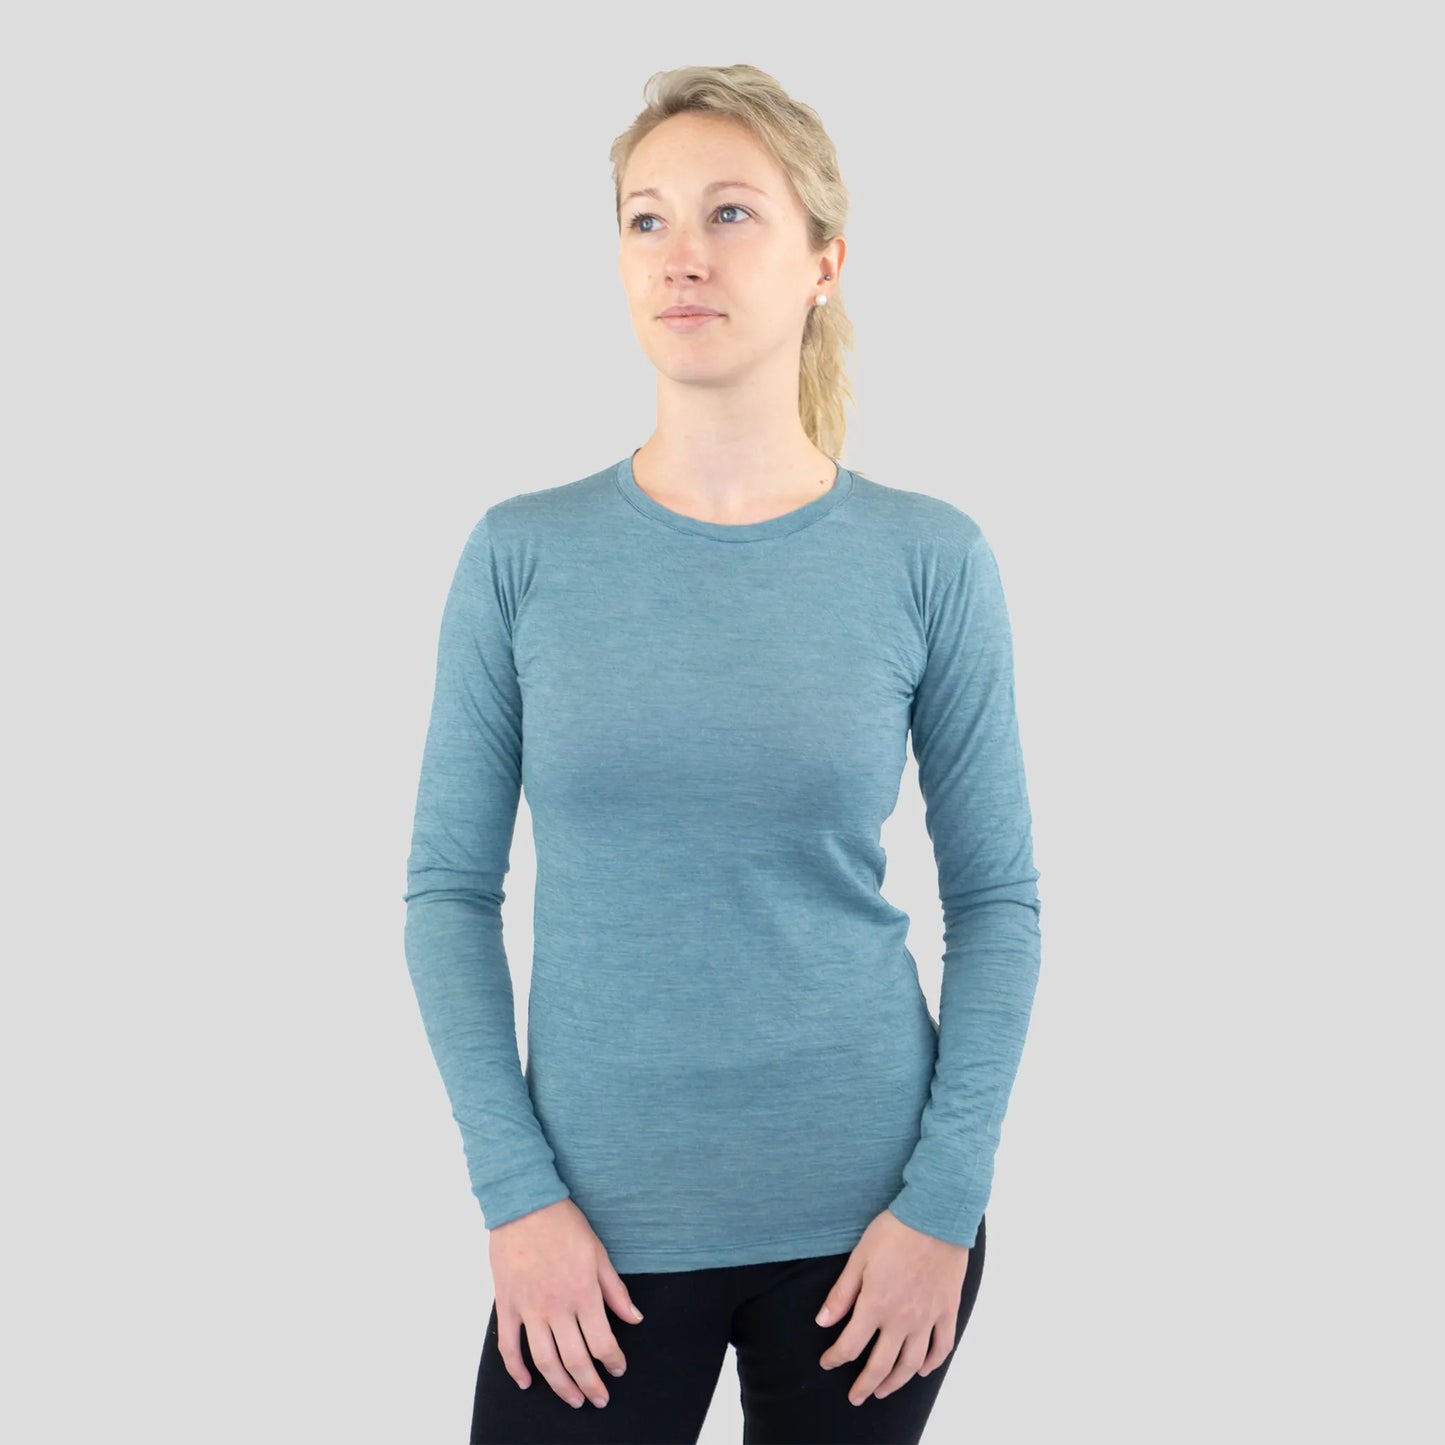 women alpaca wool shirt long sleeve ultralight color natural turquoise